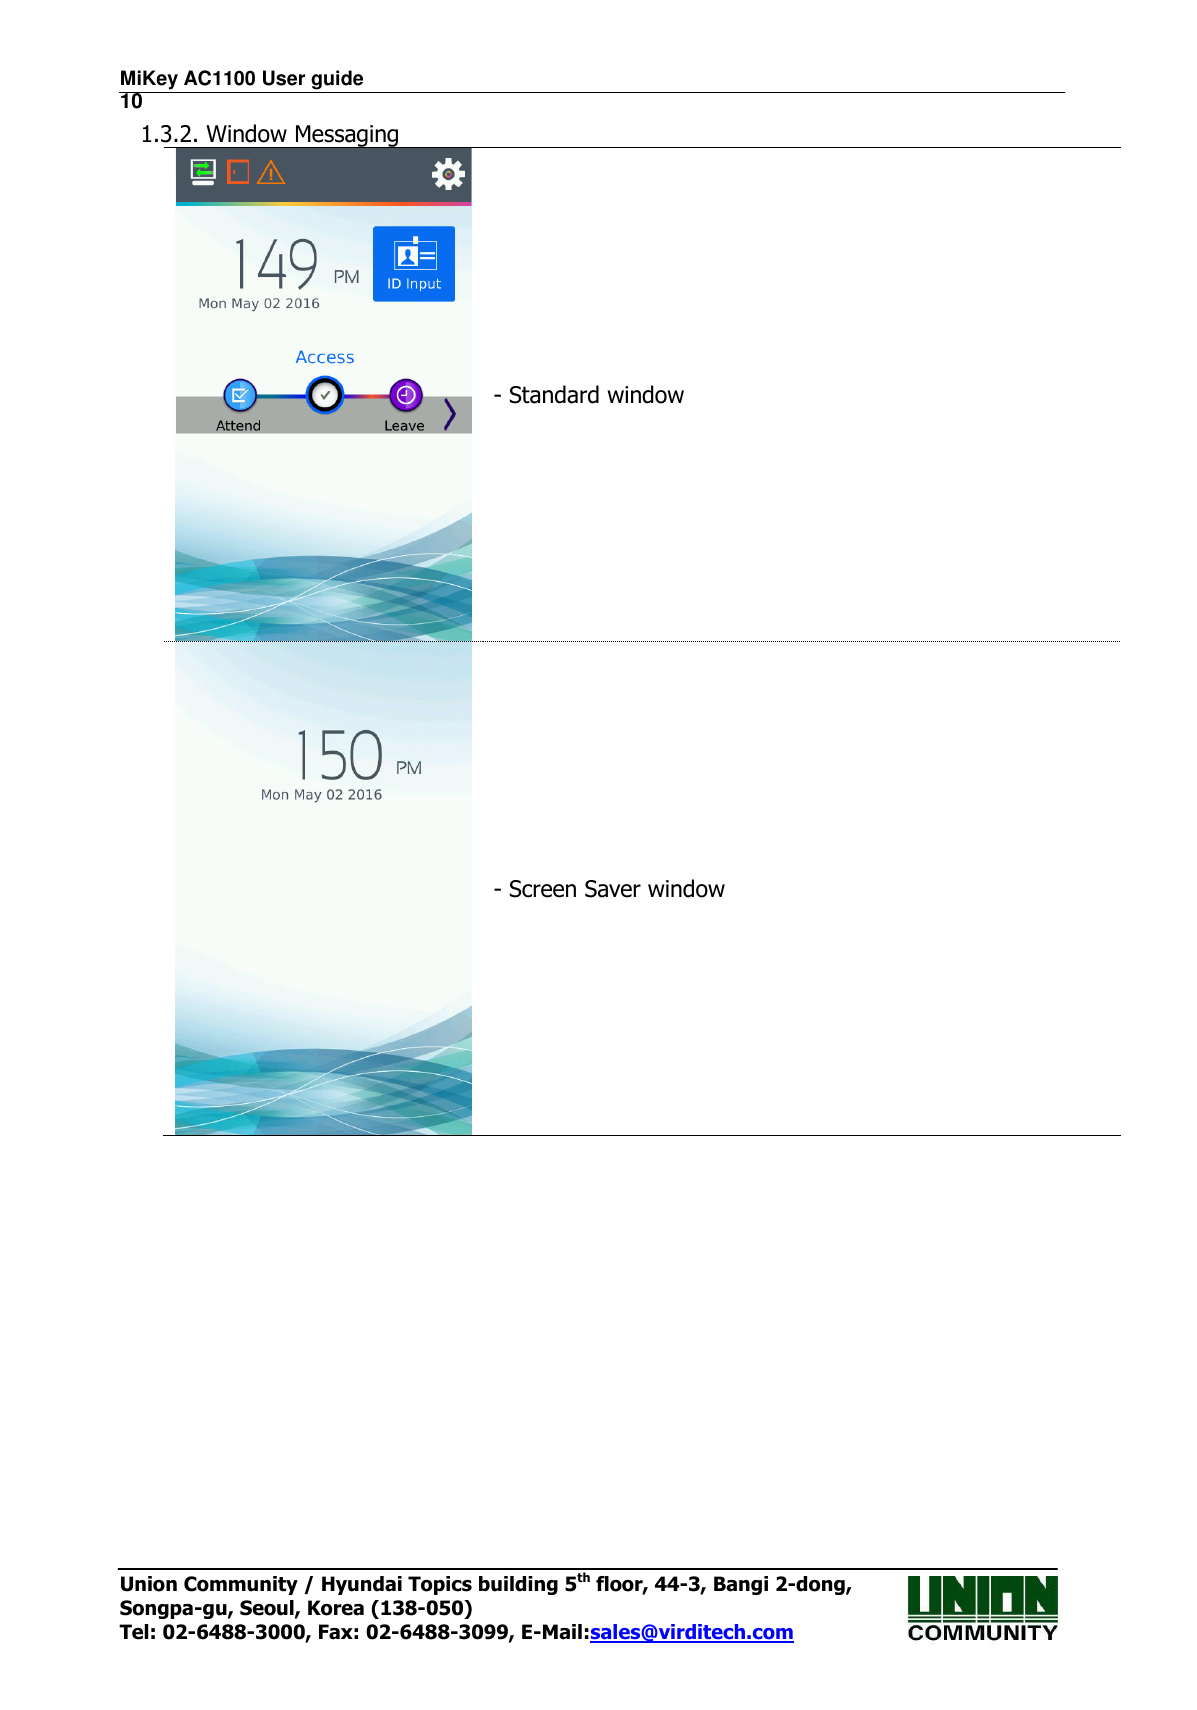 MiKey AC1100 User guide                                                                      10 Union Community / Hyundai Topics building 5th floor, 44-3, Bangi 2-dong,   Songpa-gu, Seoul, Korea (138-050) Tel: 02-6488-3000, Fax: 02-6488-3099, E-Mail:sales@virditech.com 1.3.2. Window Messaging  - Standard window  - Screen Saver window 